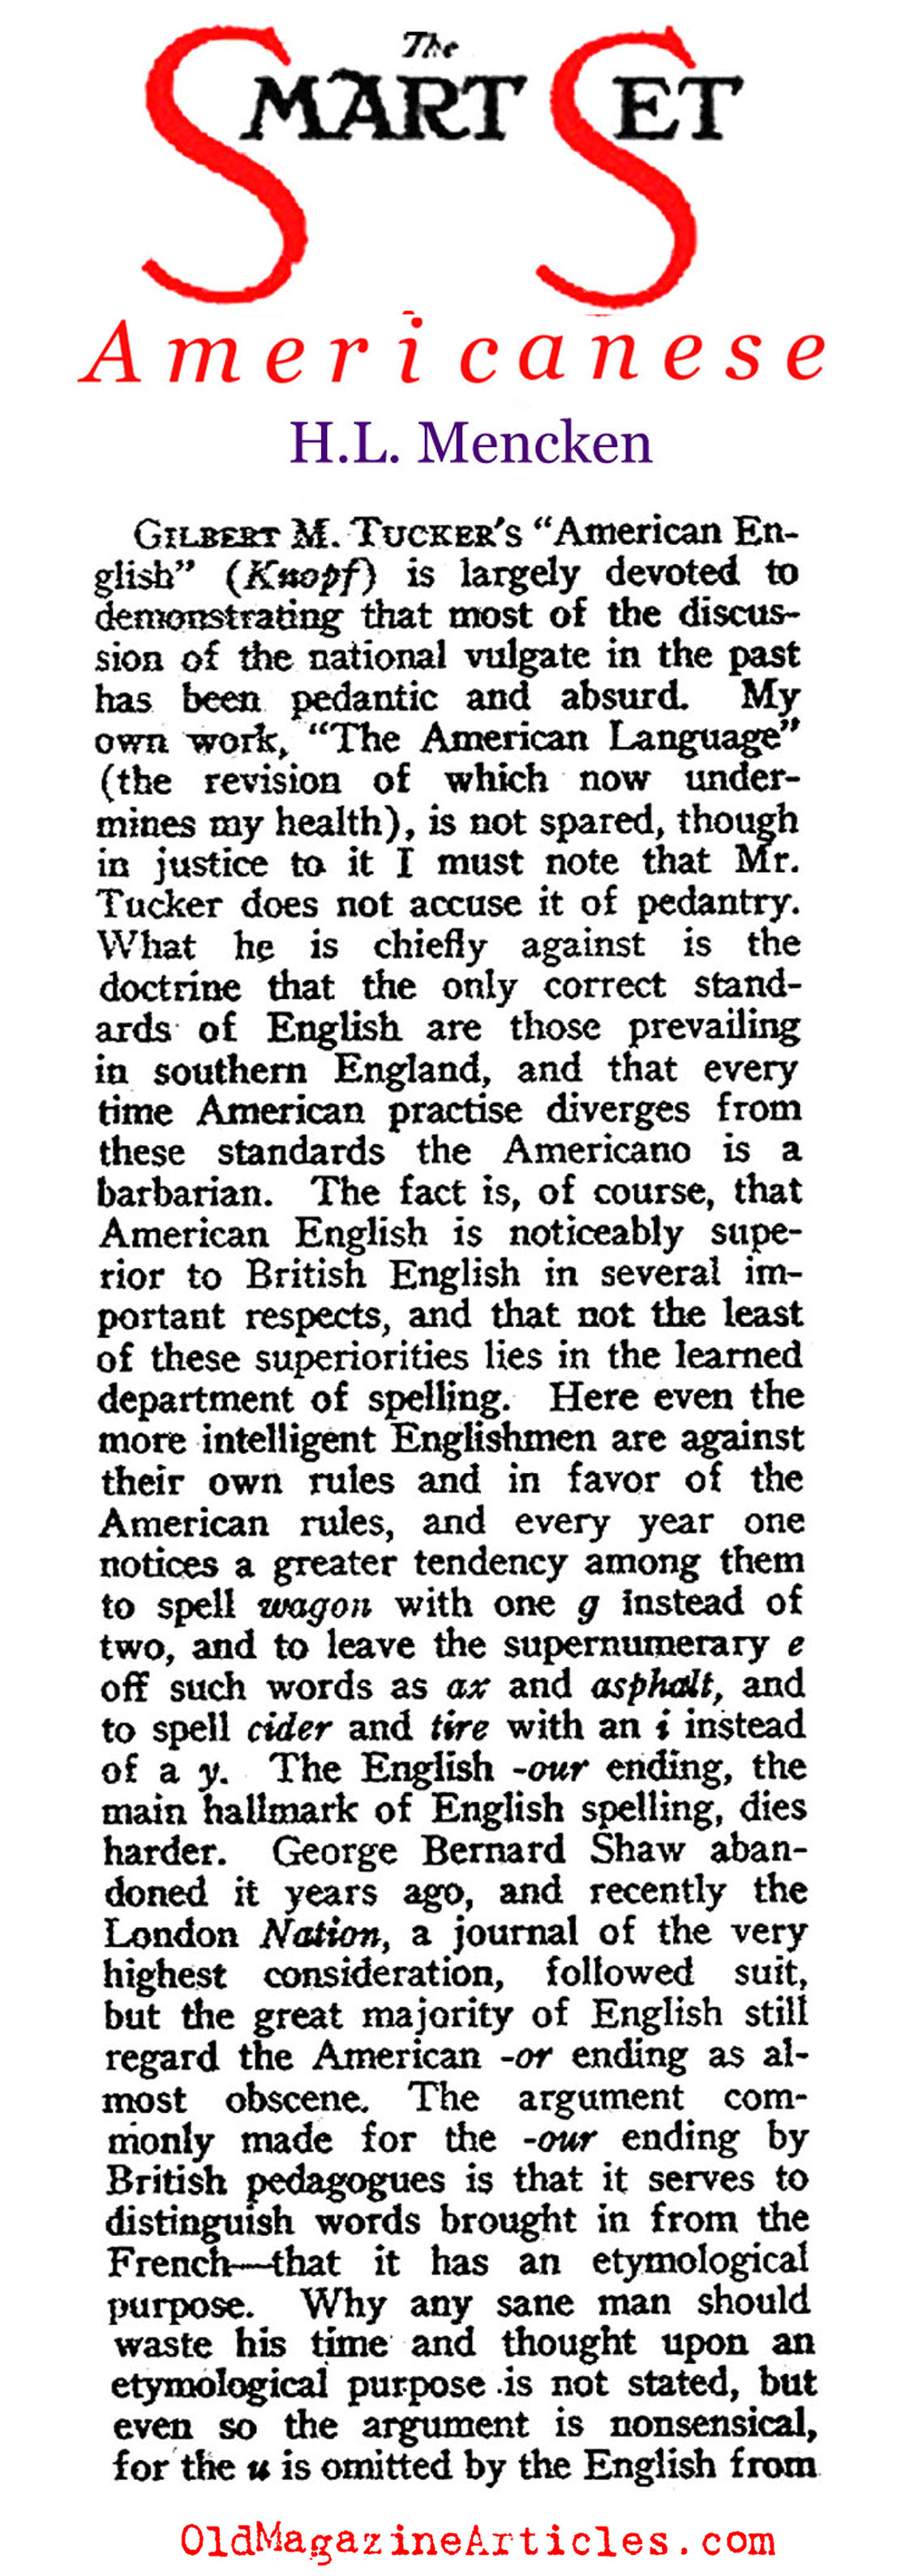 H.L. Mencken on American English (The Smart Set, 1921)